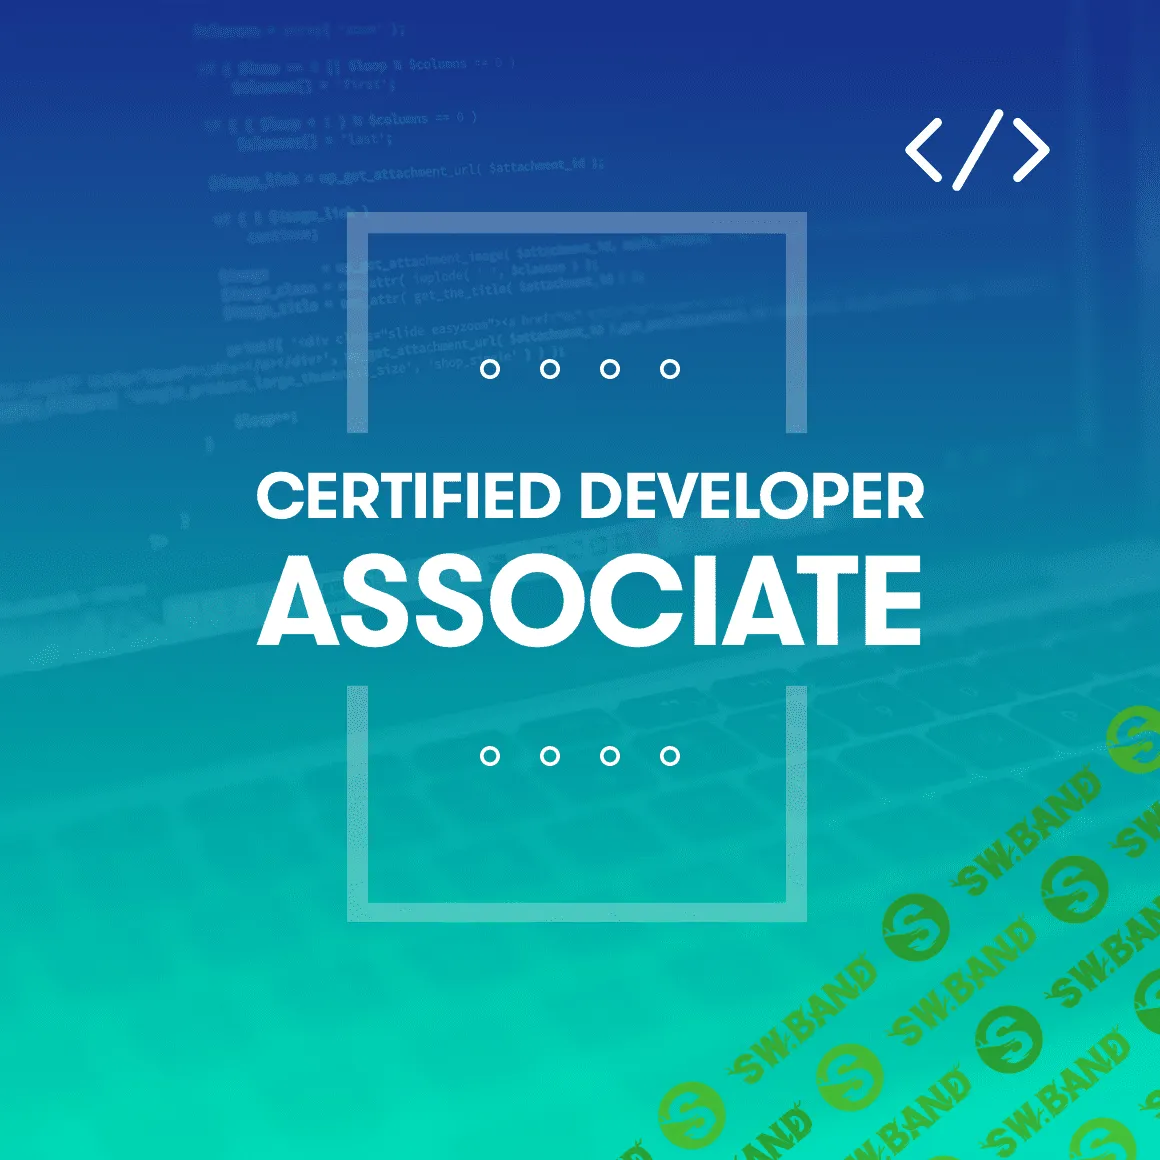 [acloud.guru] AWS Certified Developer - Associate 2020